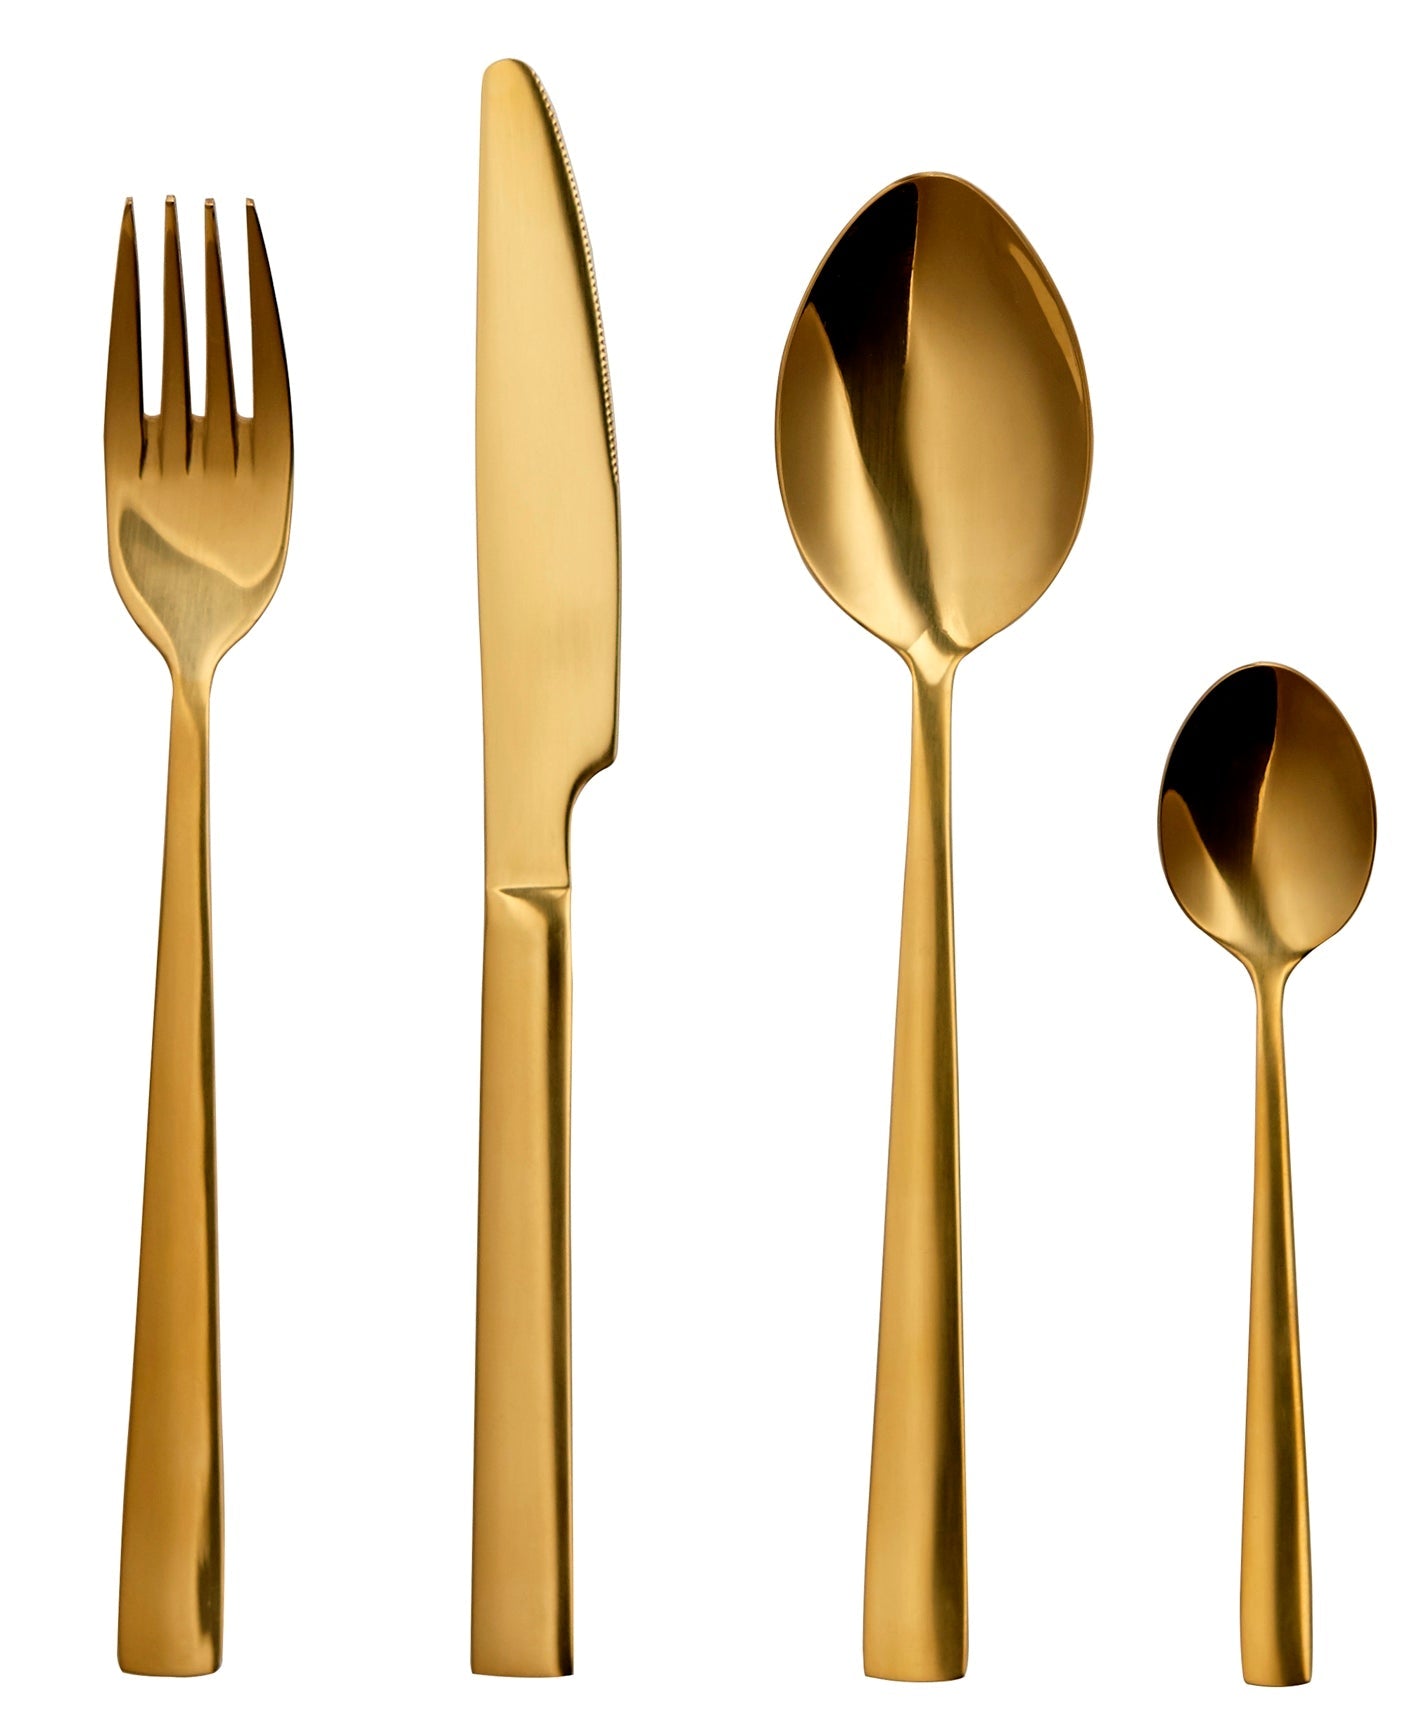 Flatware Silverware 16 Piece Cutlery Utensils Set for 4, Gold - DecoElegance -